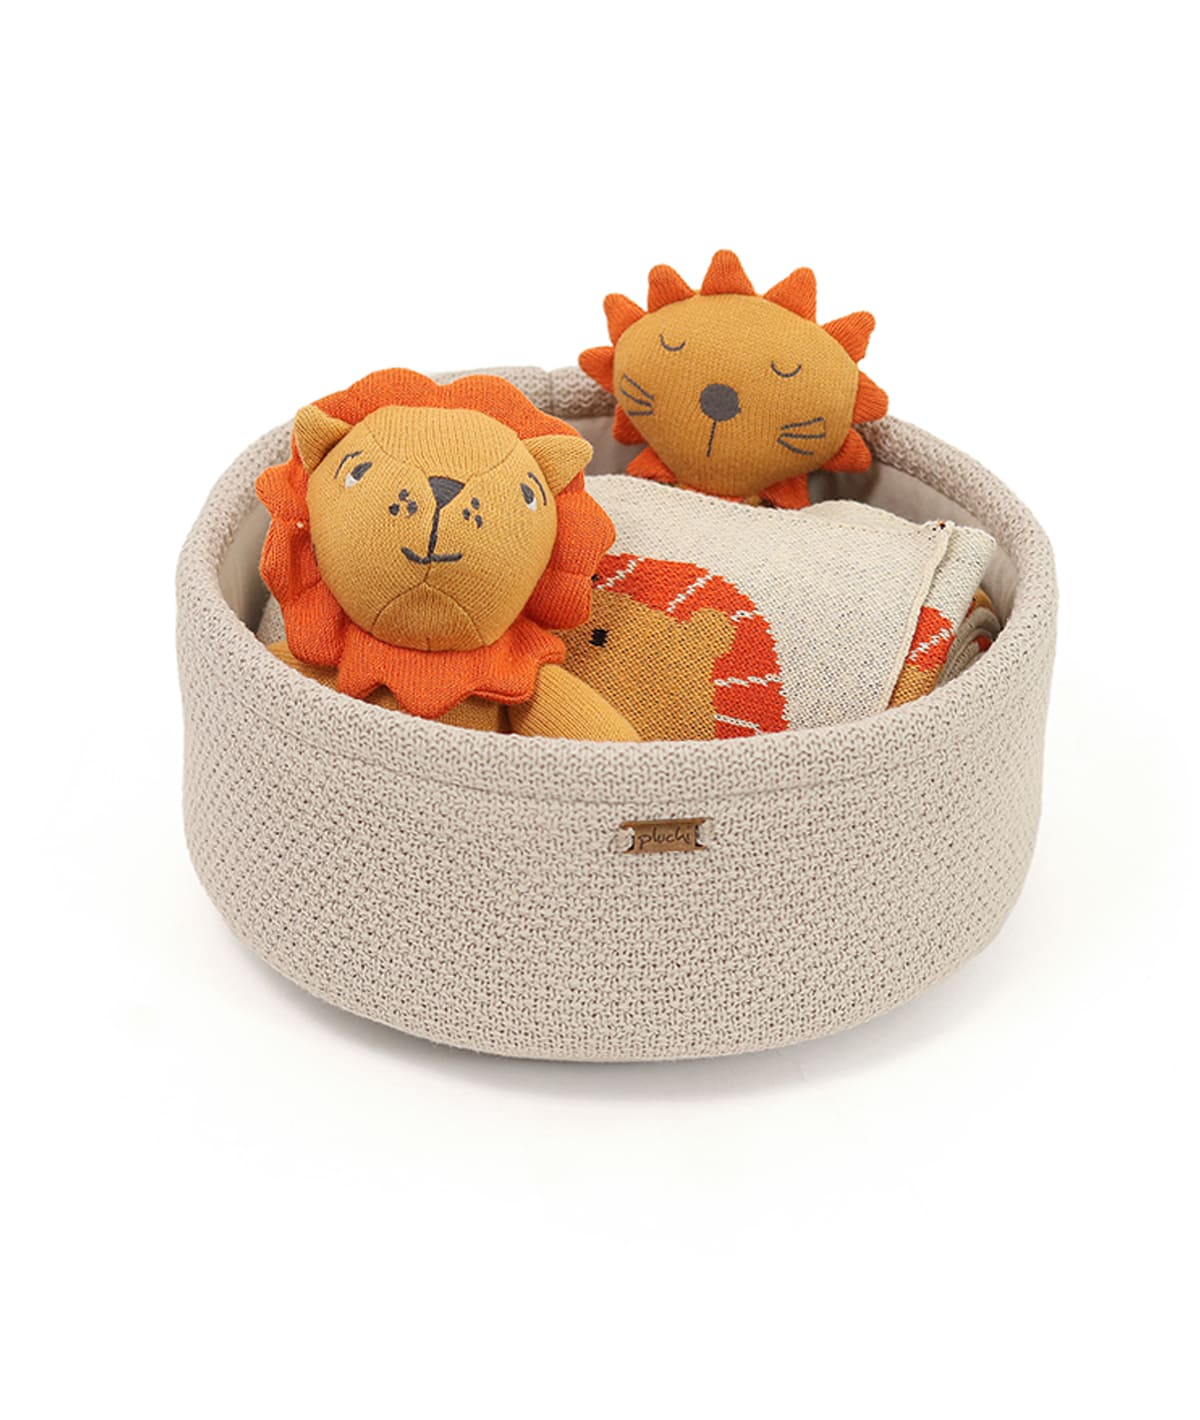 Leo Gift Basket (Set of 4 pcs - Storage Basket, Knitted Baby Blanket, Soft Toy, and Rattle)